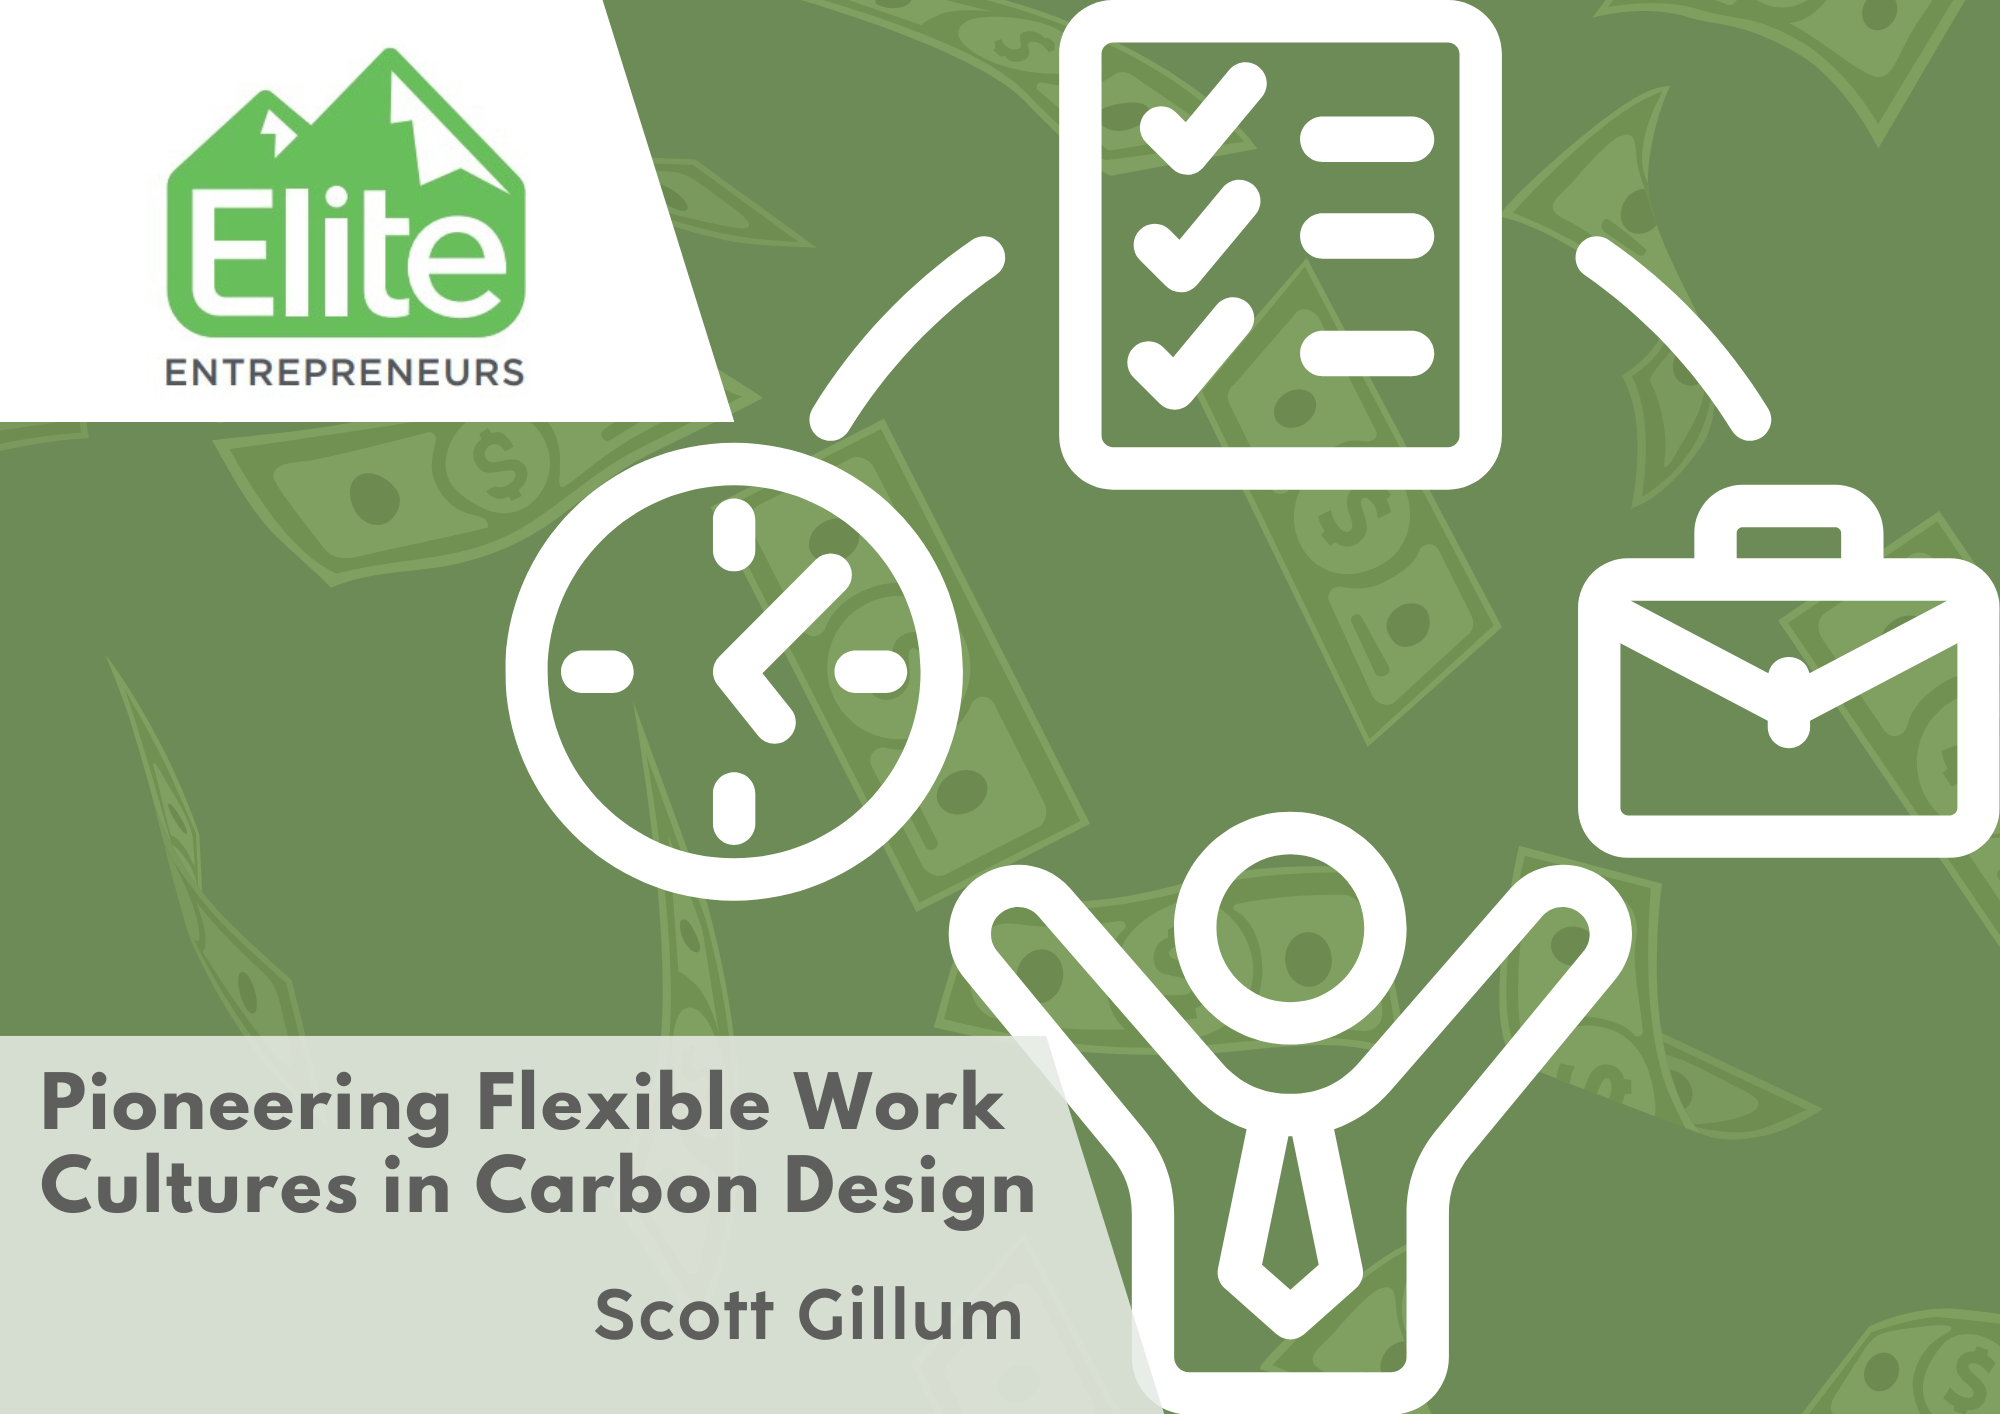 Pioneering Flexible Work Cultures: Scott Gillum and Carbon Design